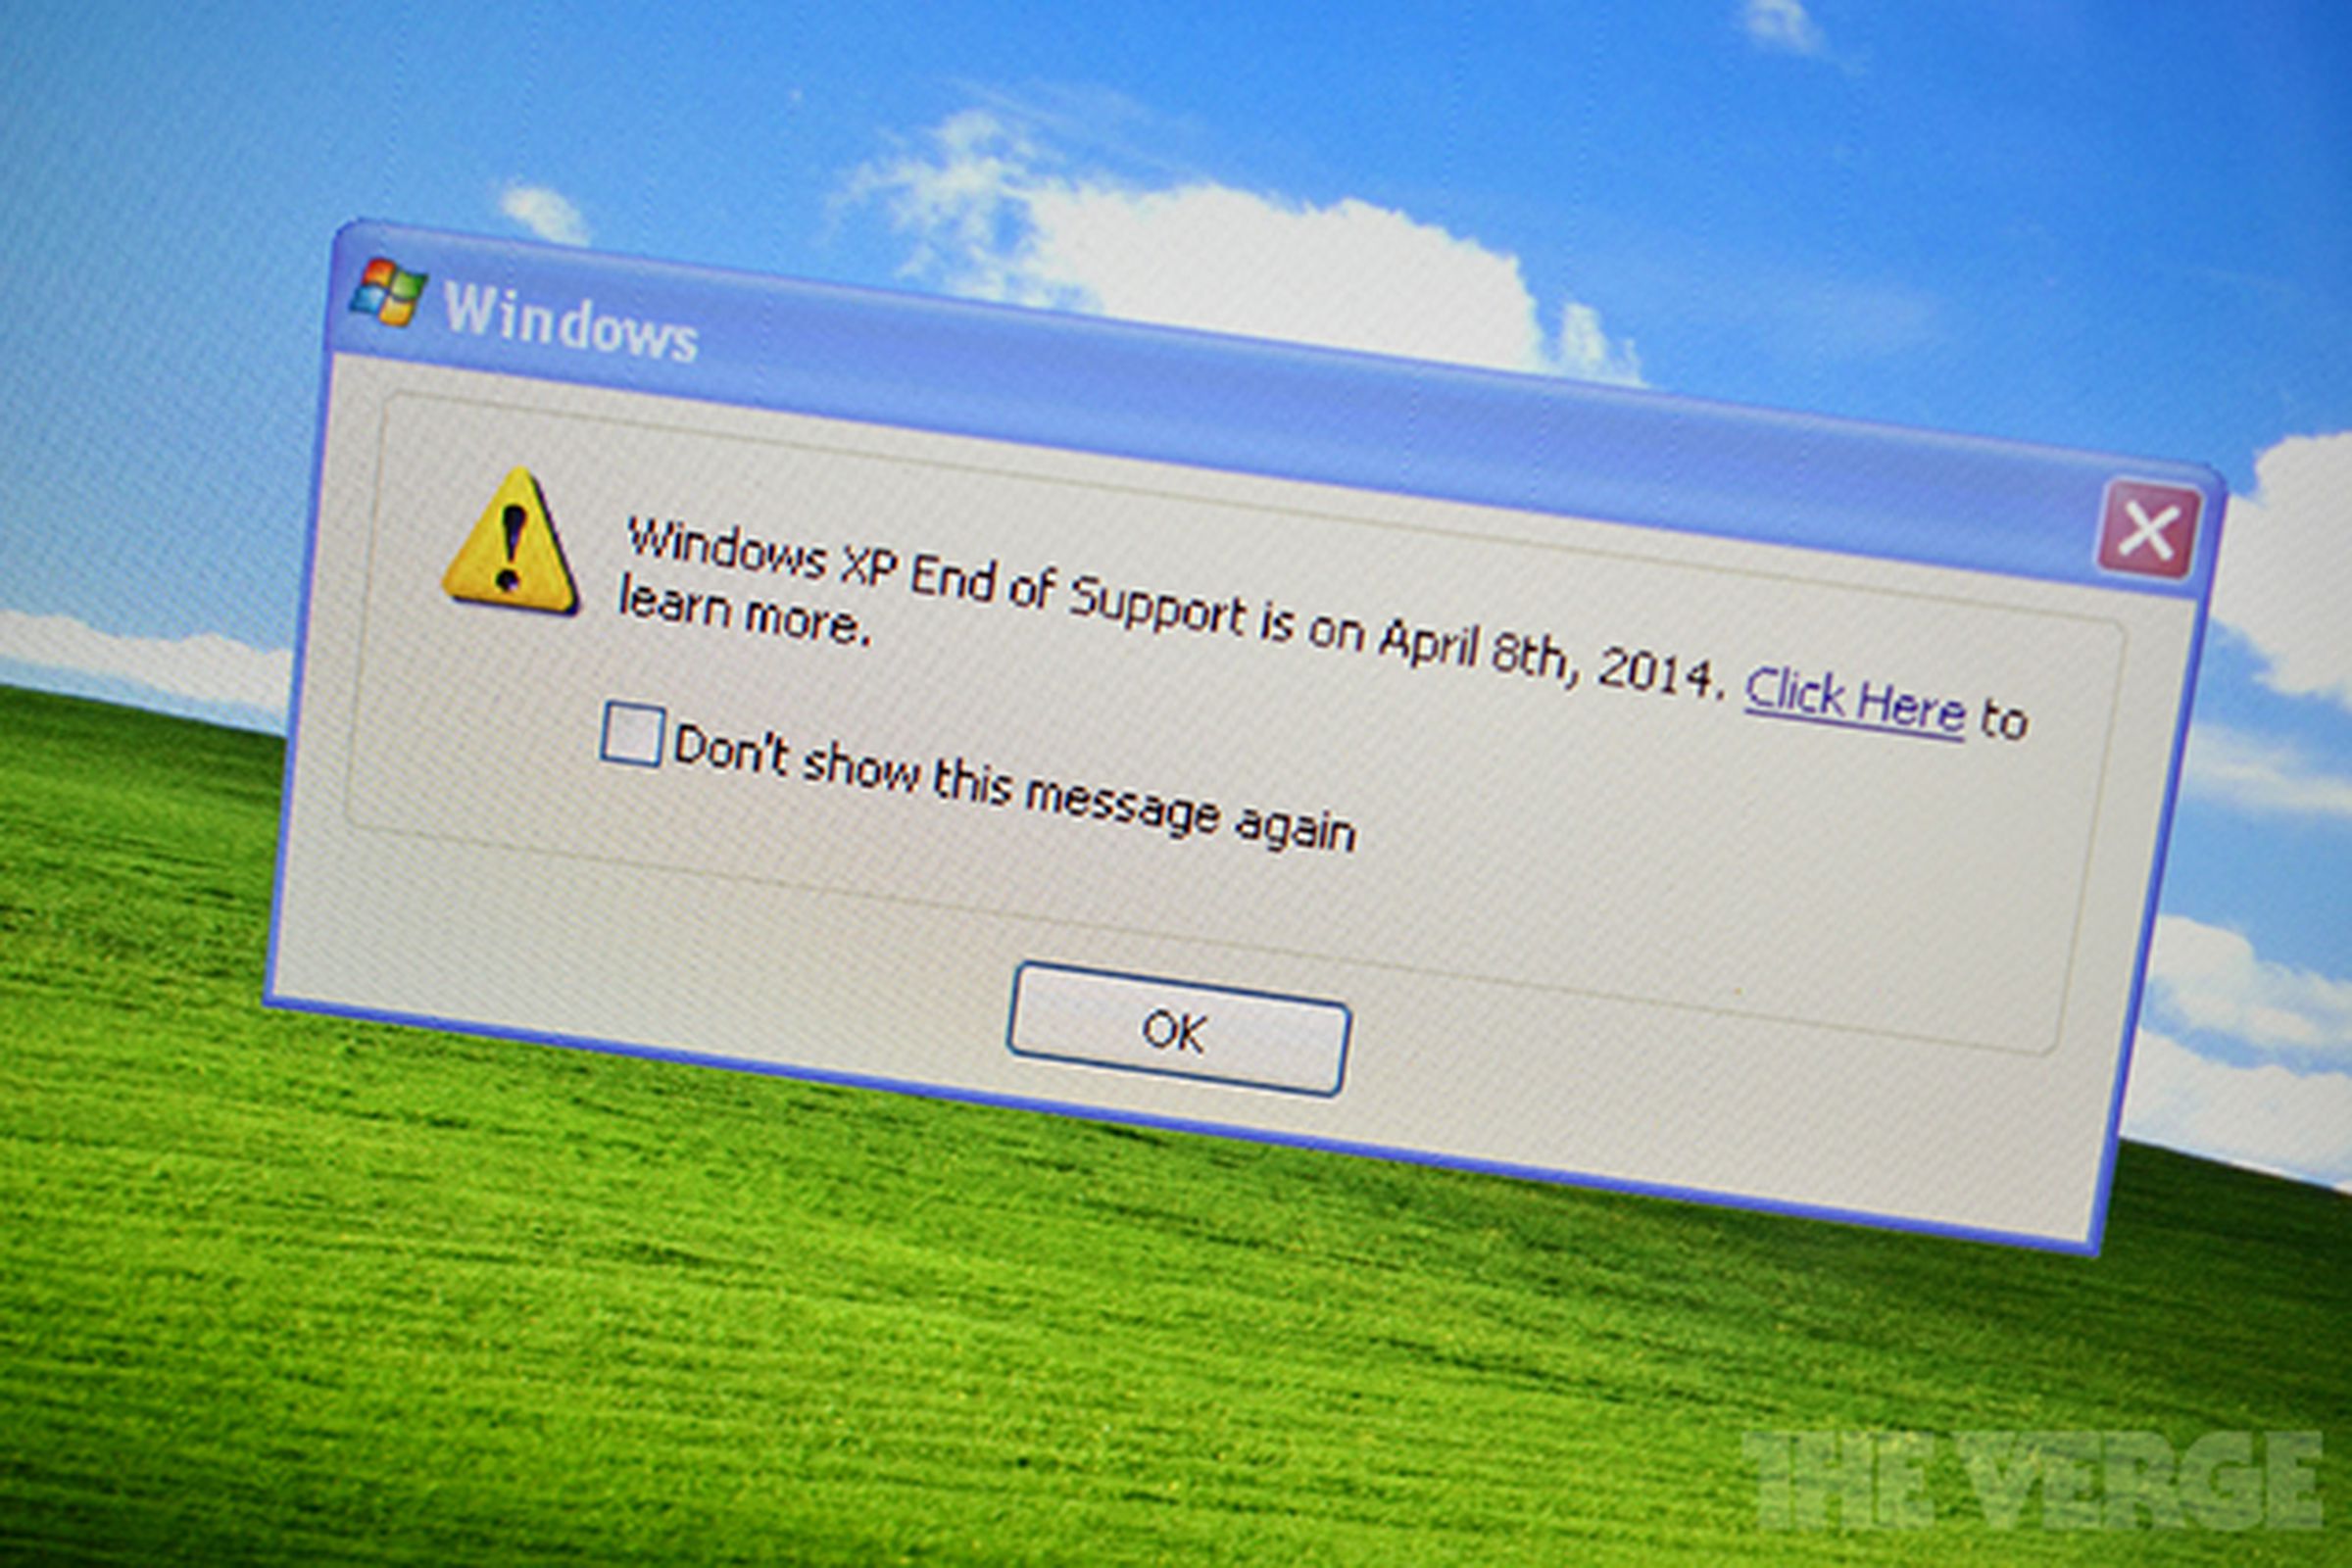 Windows XP support